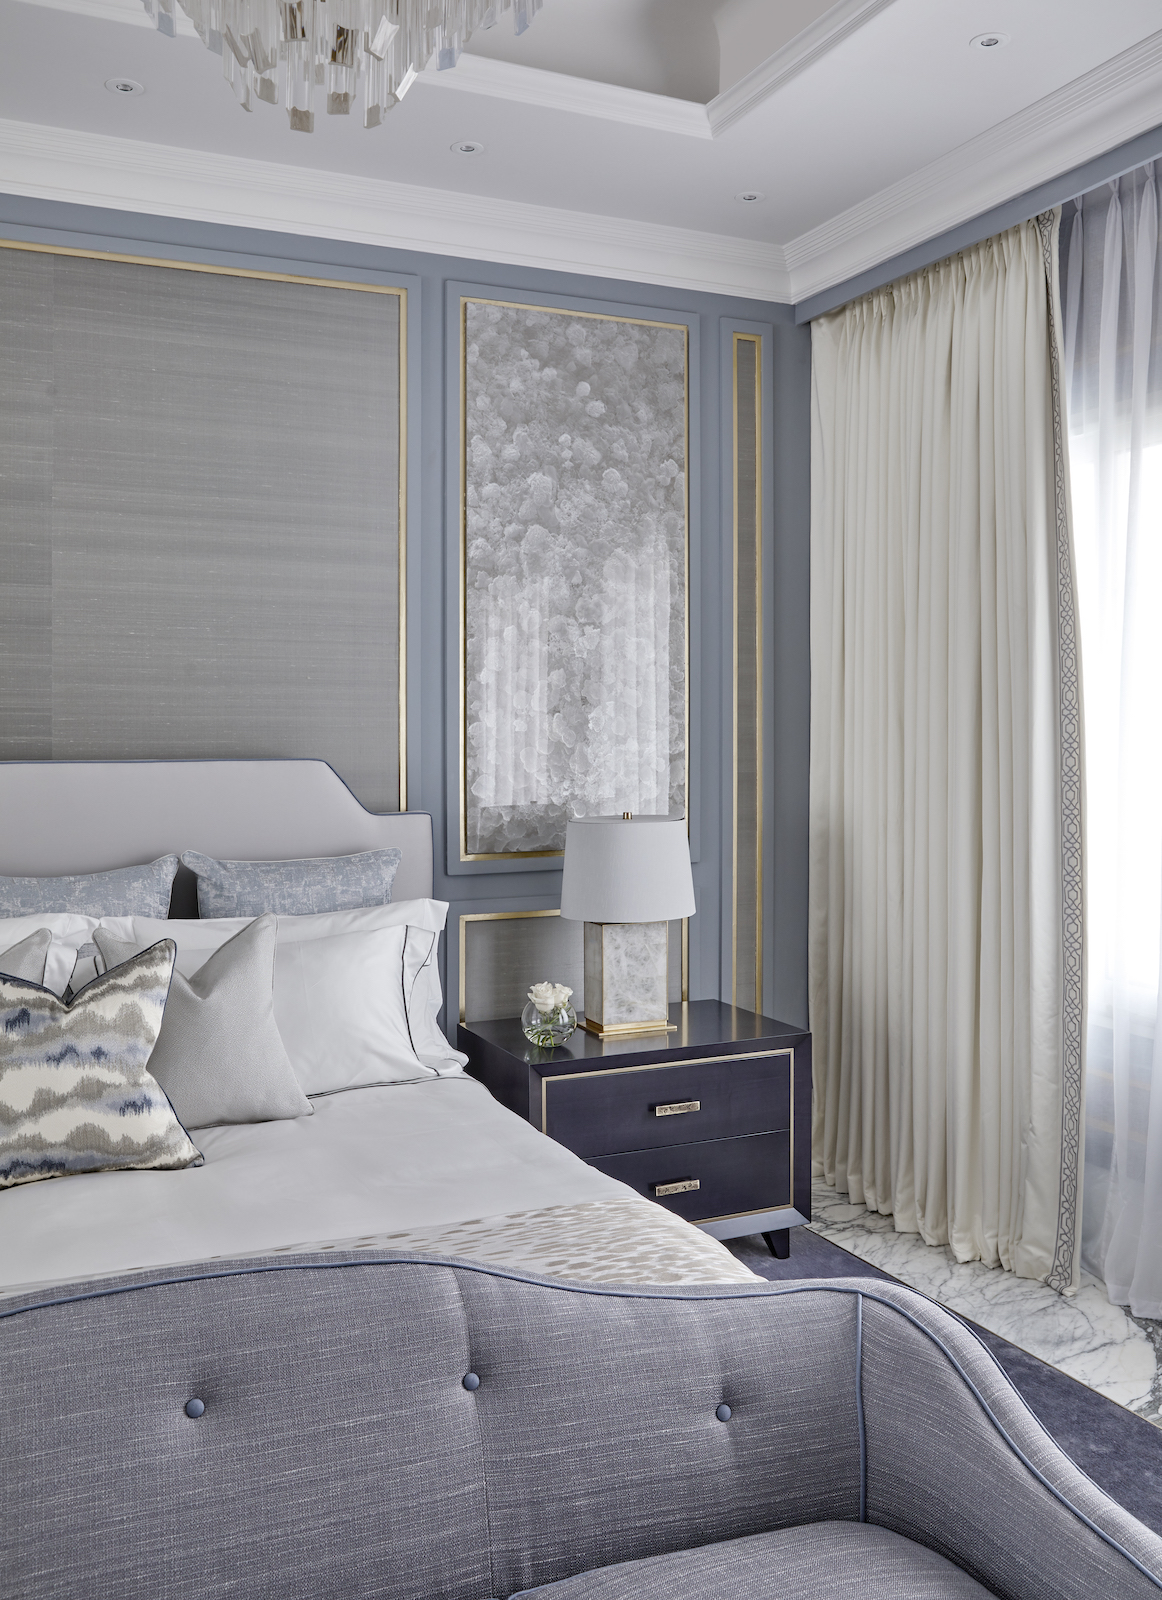 Bedroom of a villa by interior designer Katharine Pooley on Doha's Pearl Island - Effect Magazine